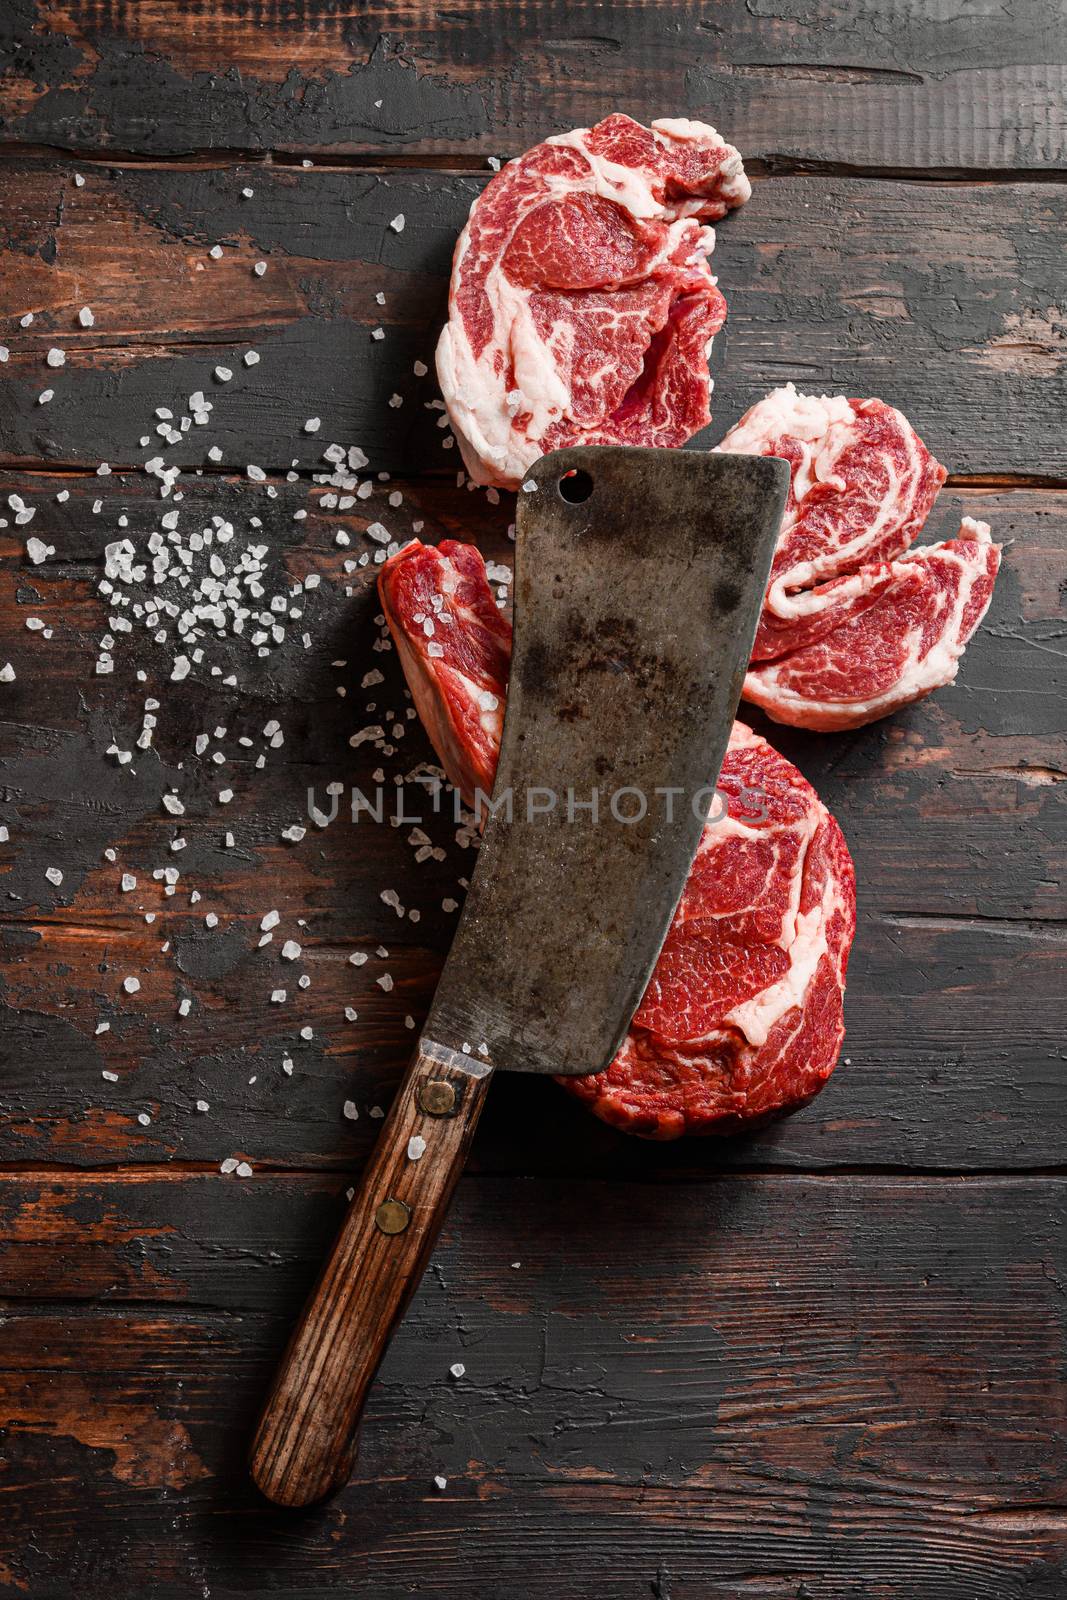 raw cowboy steak and Chuck eye roll with seasonings on old butchery wood background, prime rib by Ilianesolenyi